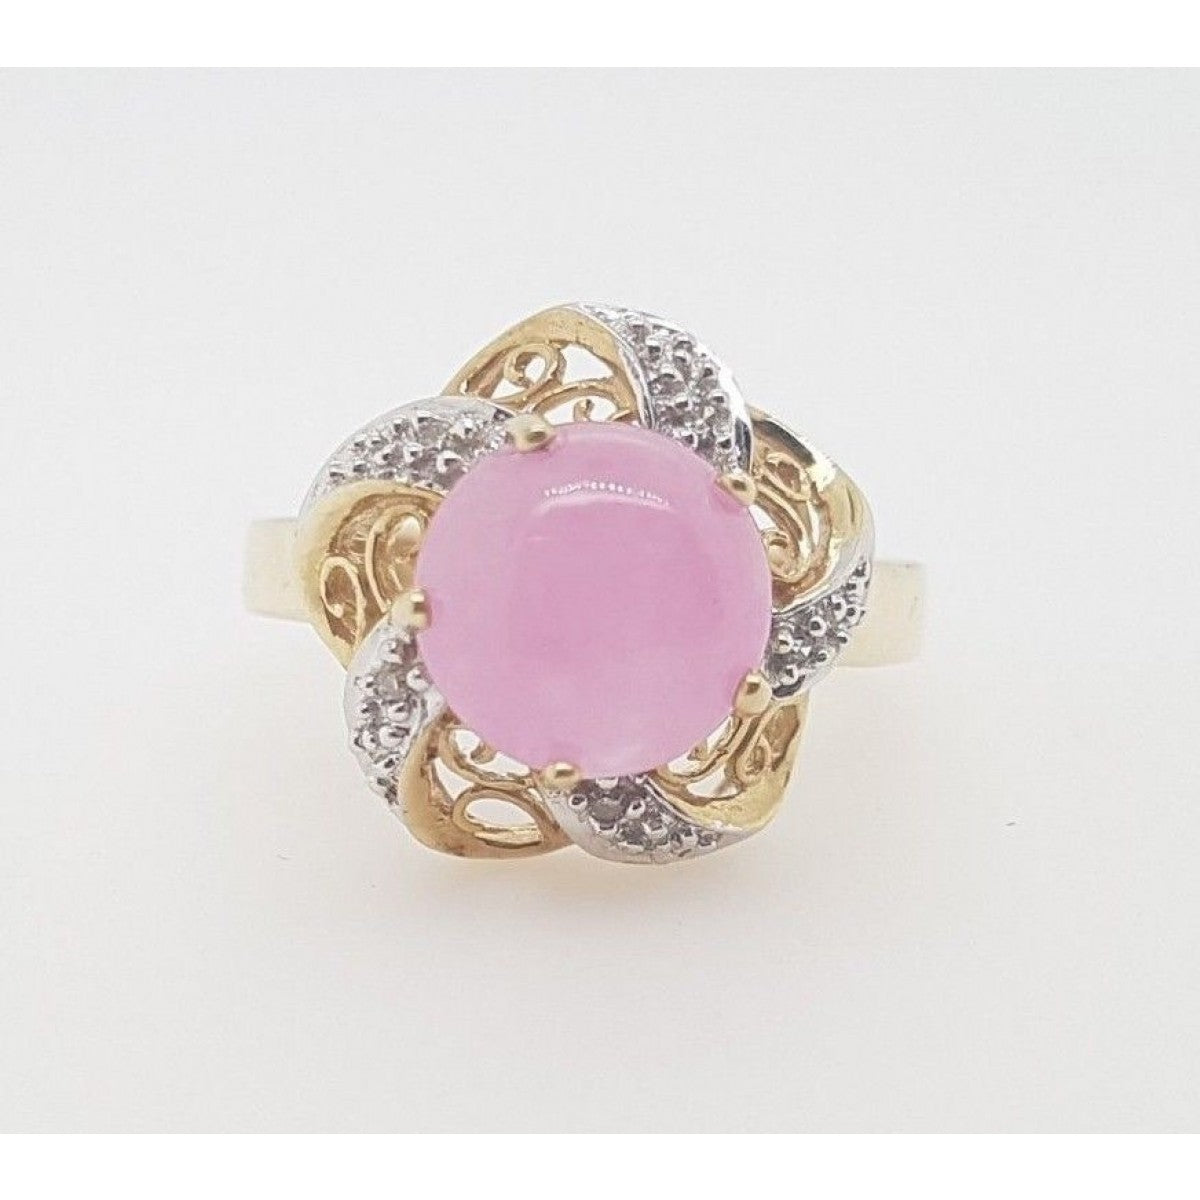 Vintage Ladies 9ct Yellow & White Gold Ring w. Pink Stone & Diamonds (Preloved)